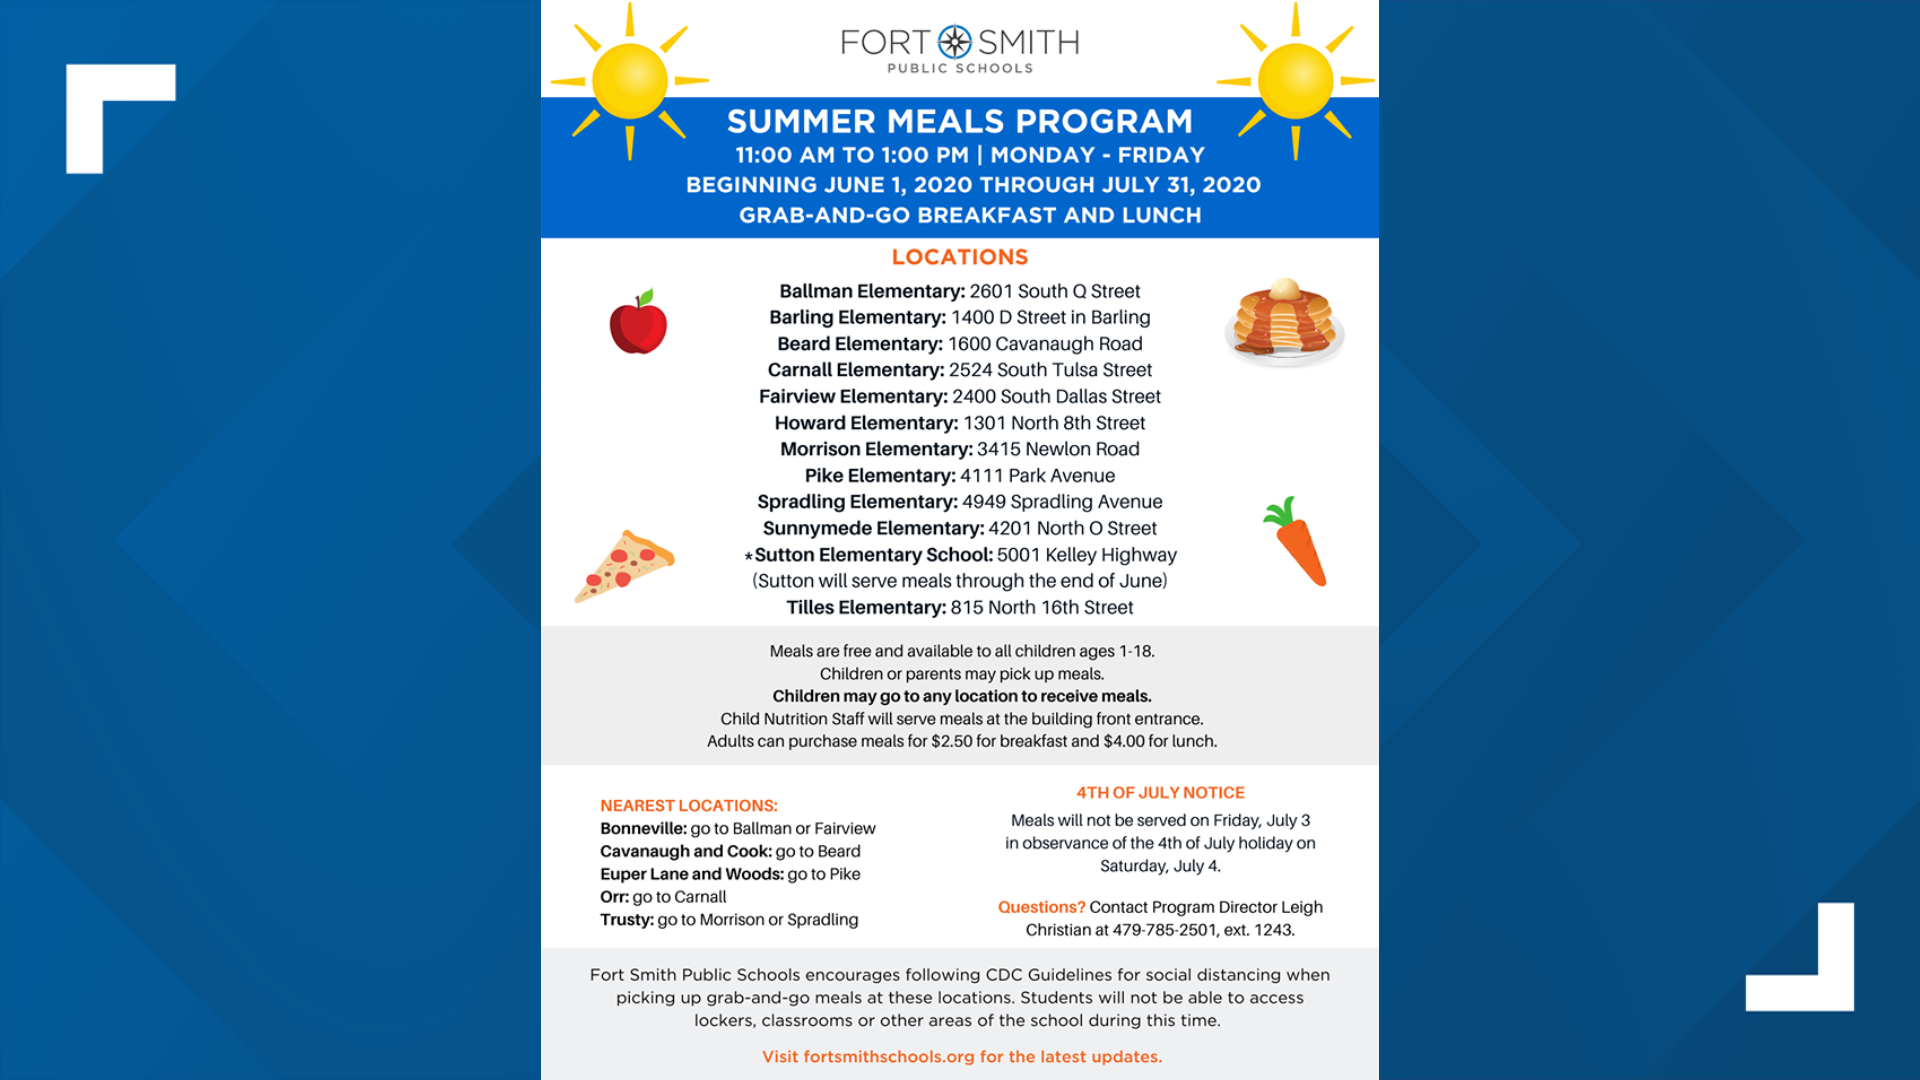 Fort Smith Public Schools announced 2020 summer meals program